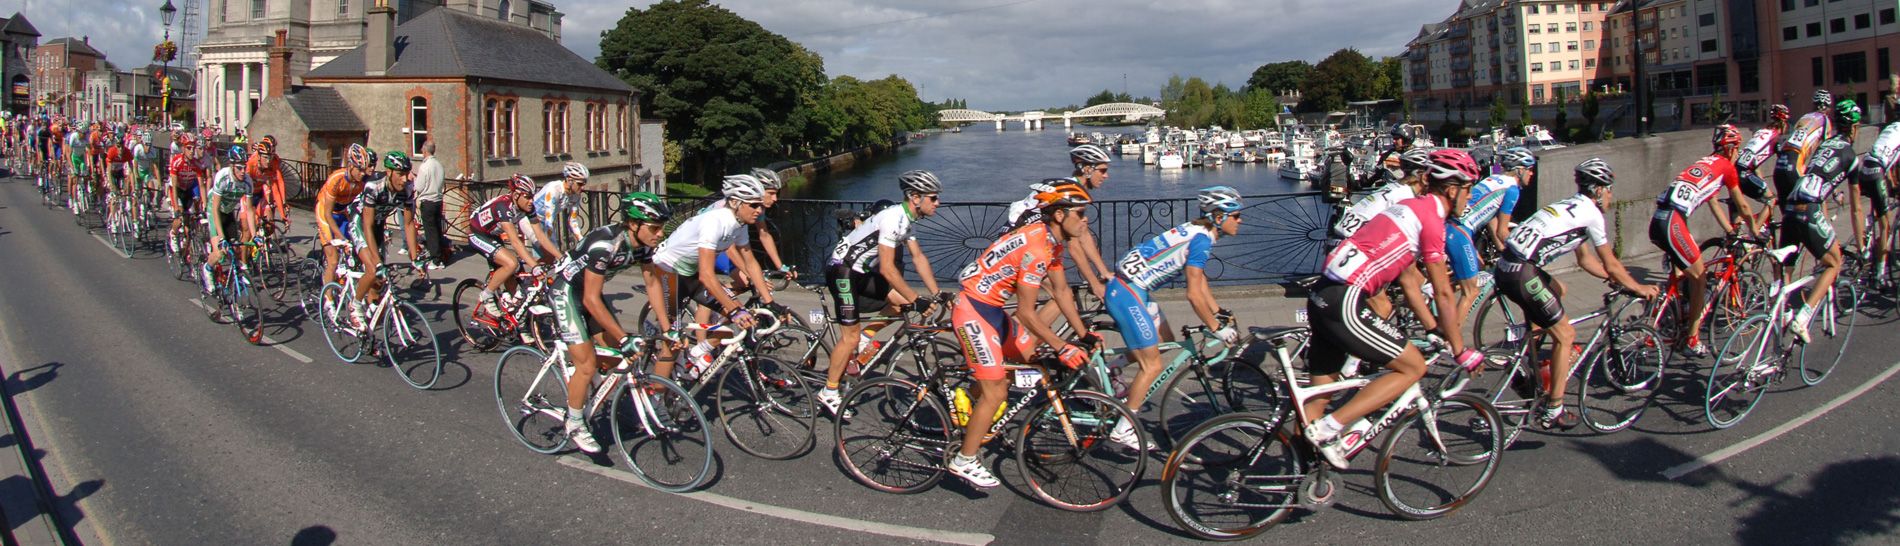 Tour of Ireland: the peloton crosses the bridge